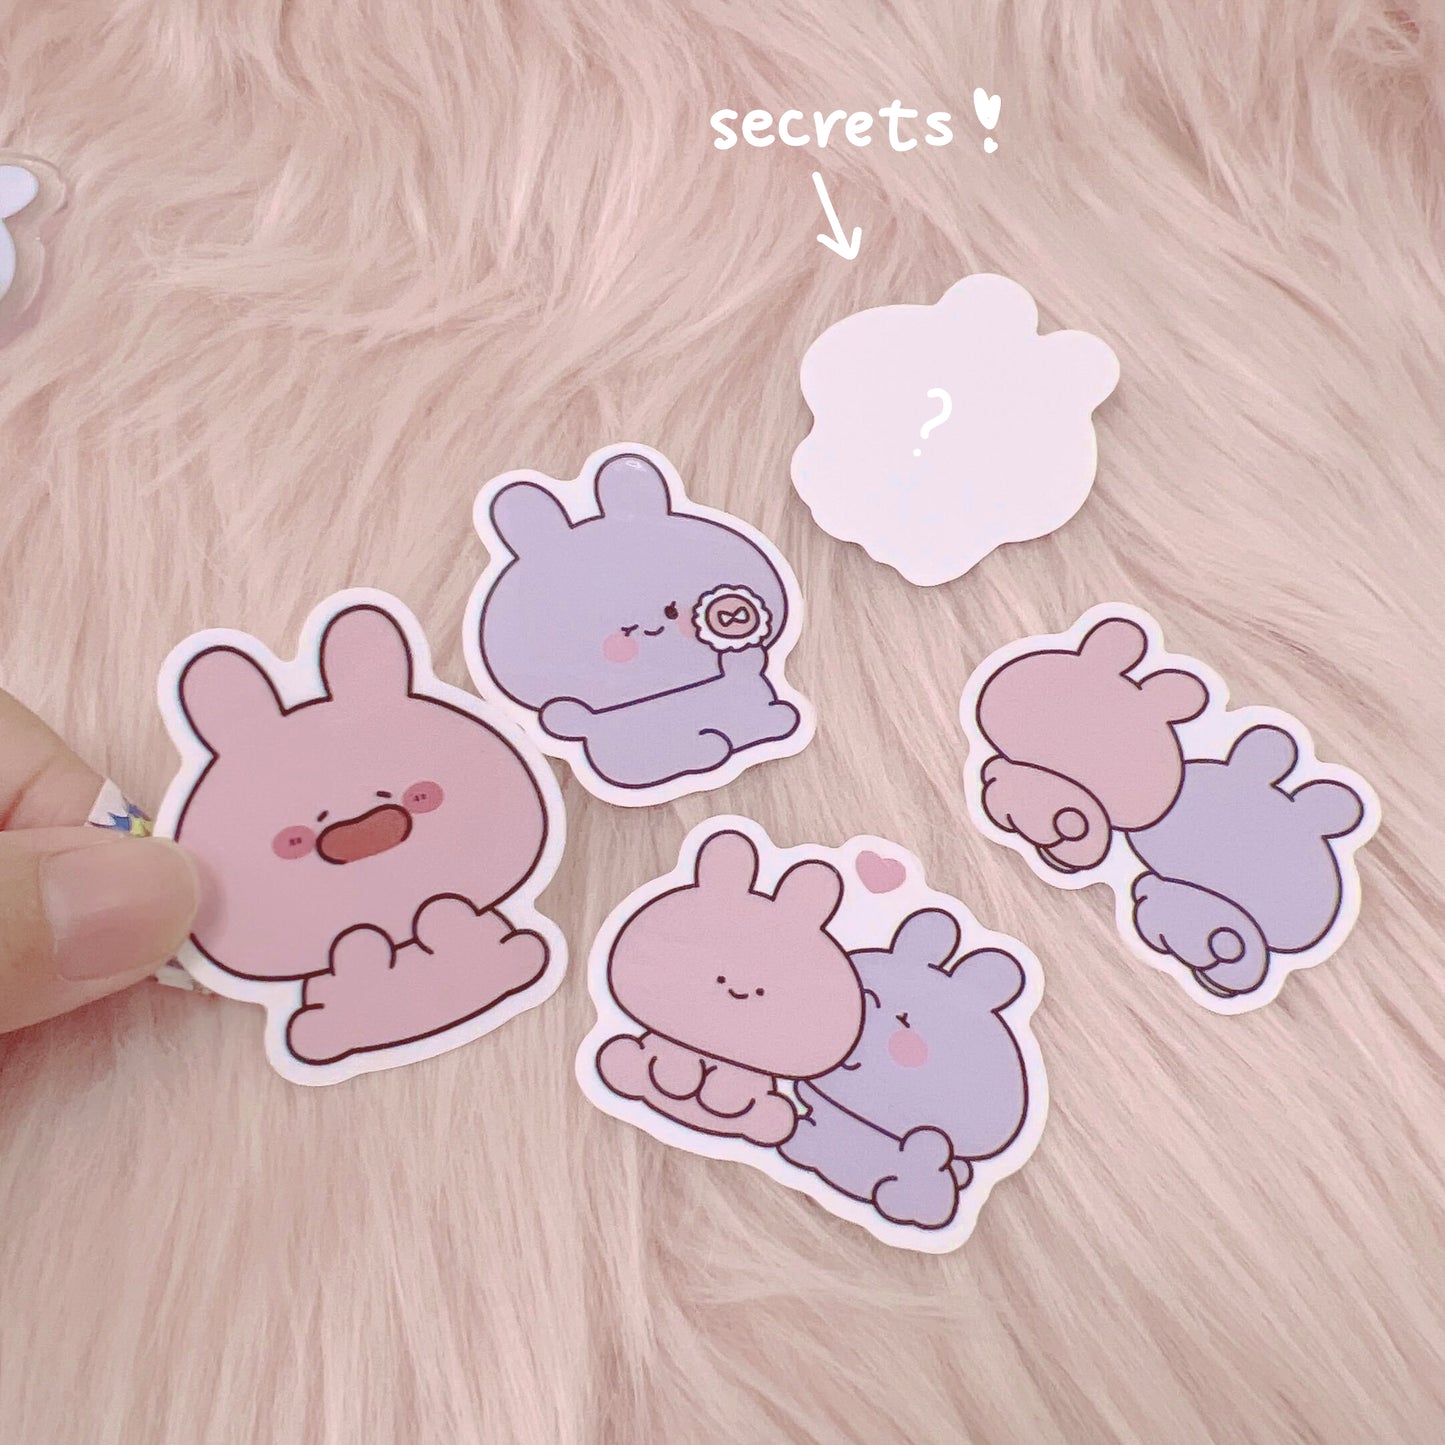 [Asamimi-chan] Random sticker (with secret) (Asamimi BASIC 2023April)